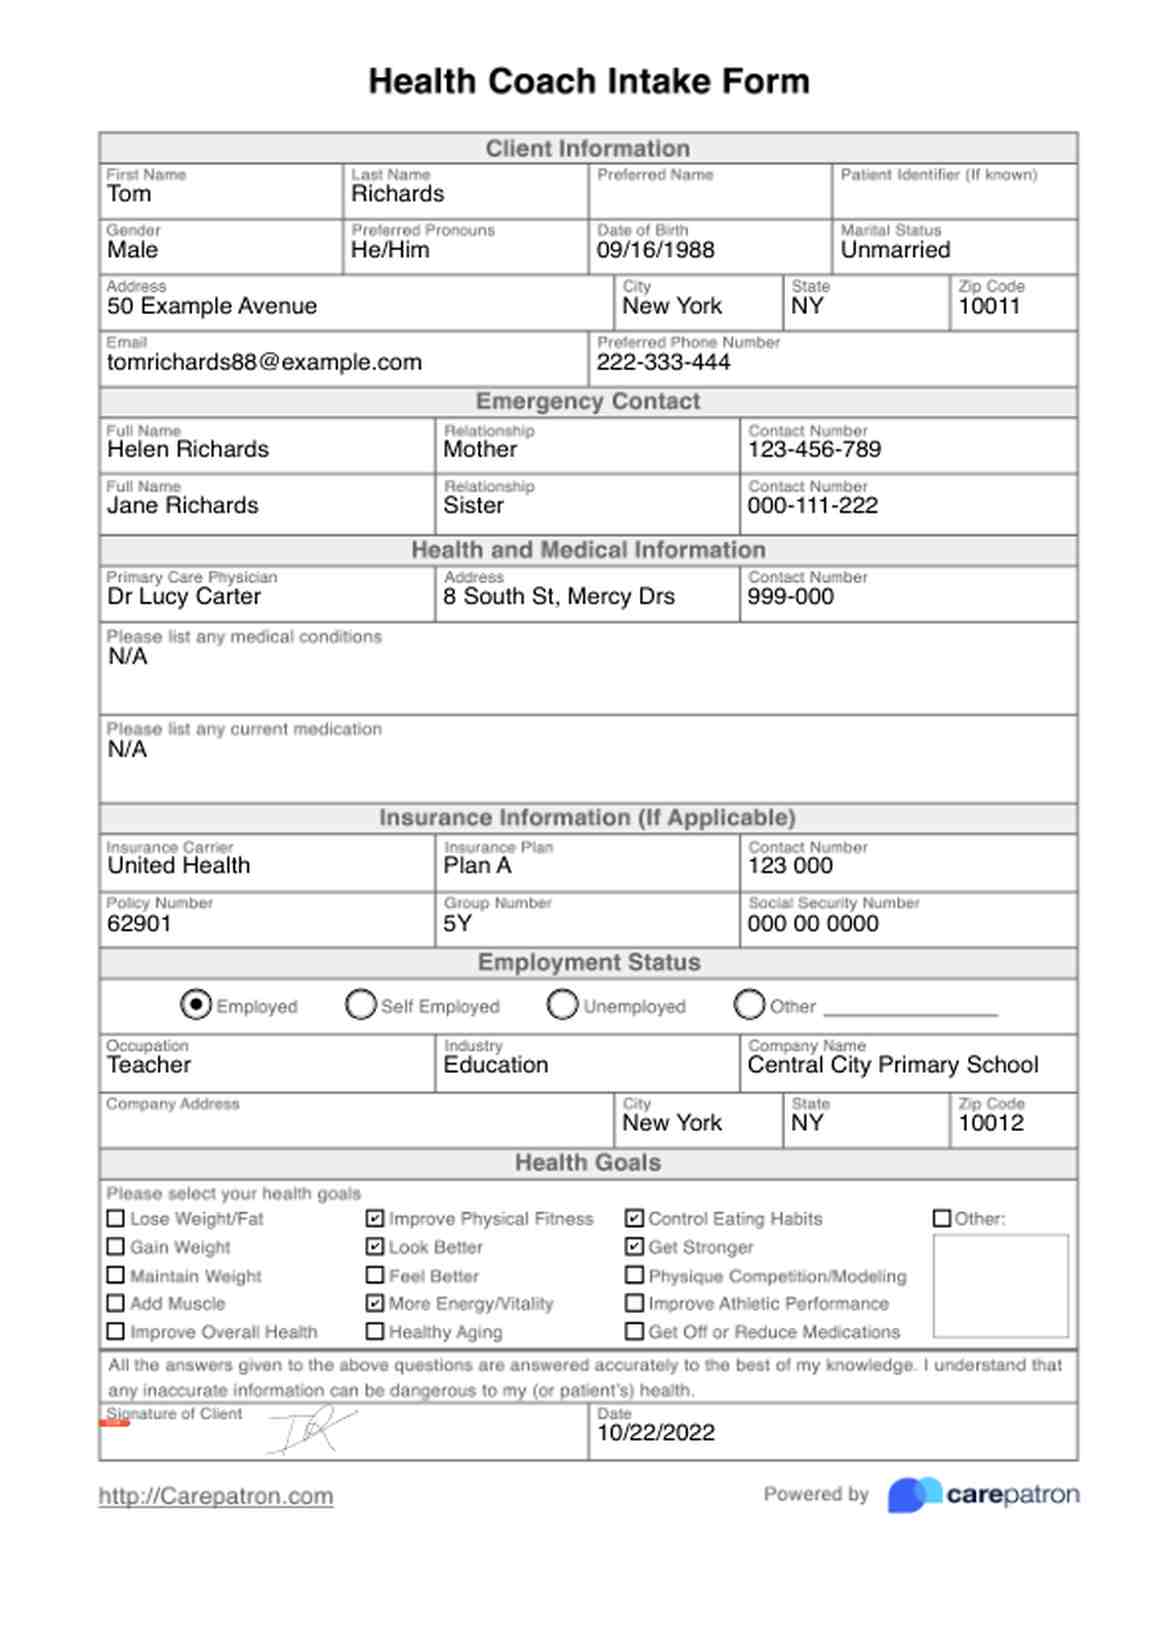 Health Coach Intake Form PDF Example